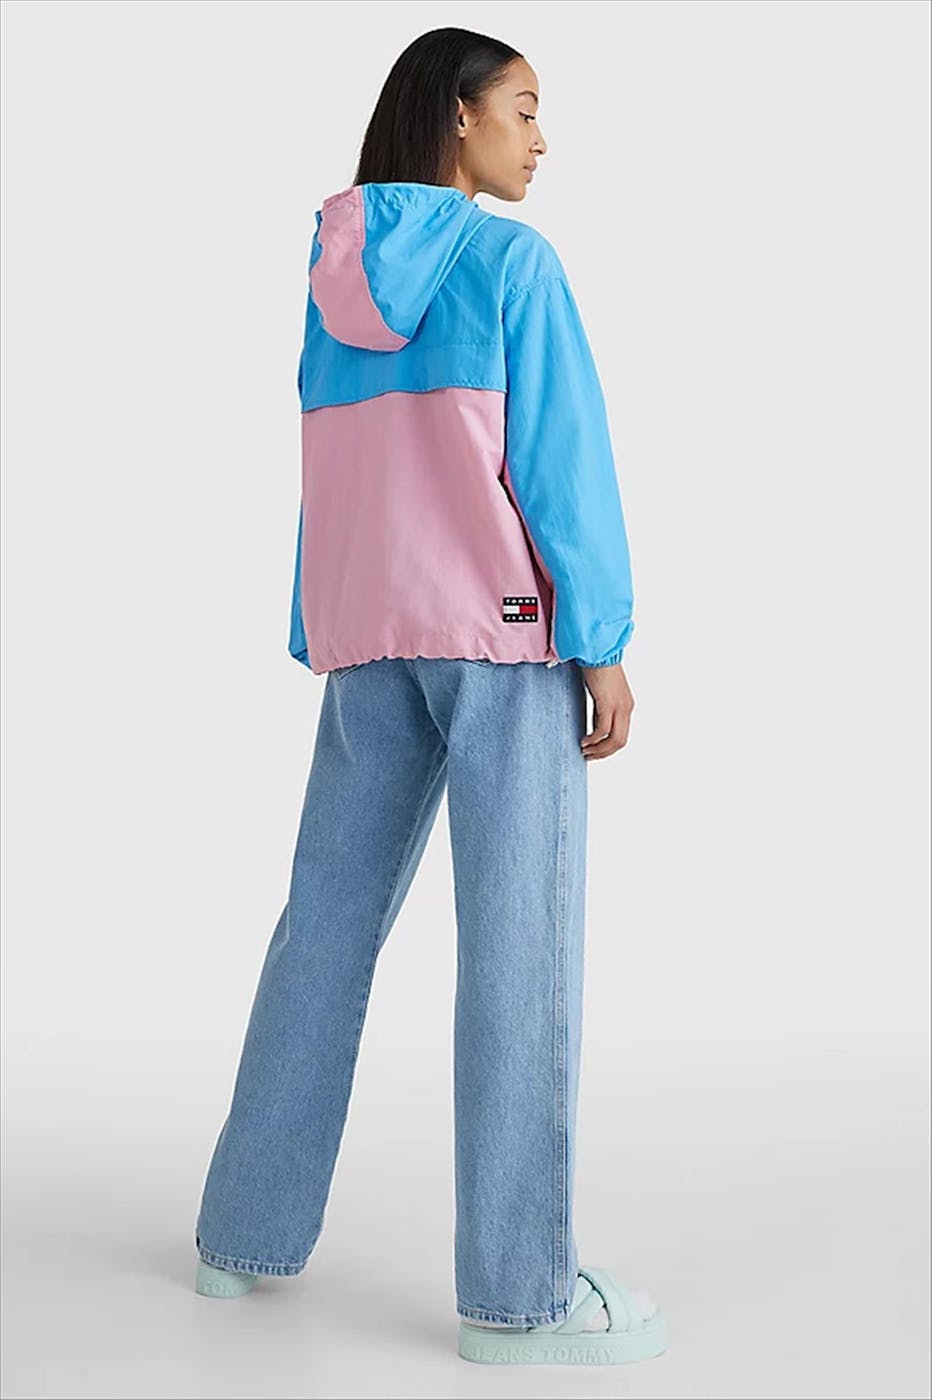 Tommy Jeans - Blauw-roze TJW Chicago Colorblock jas